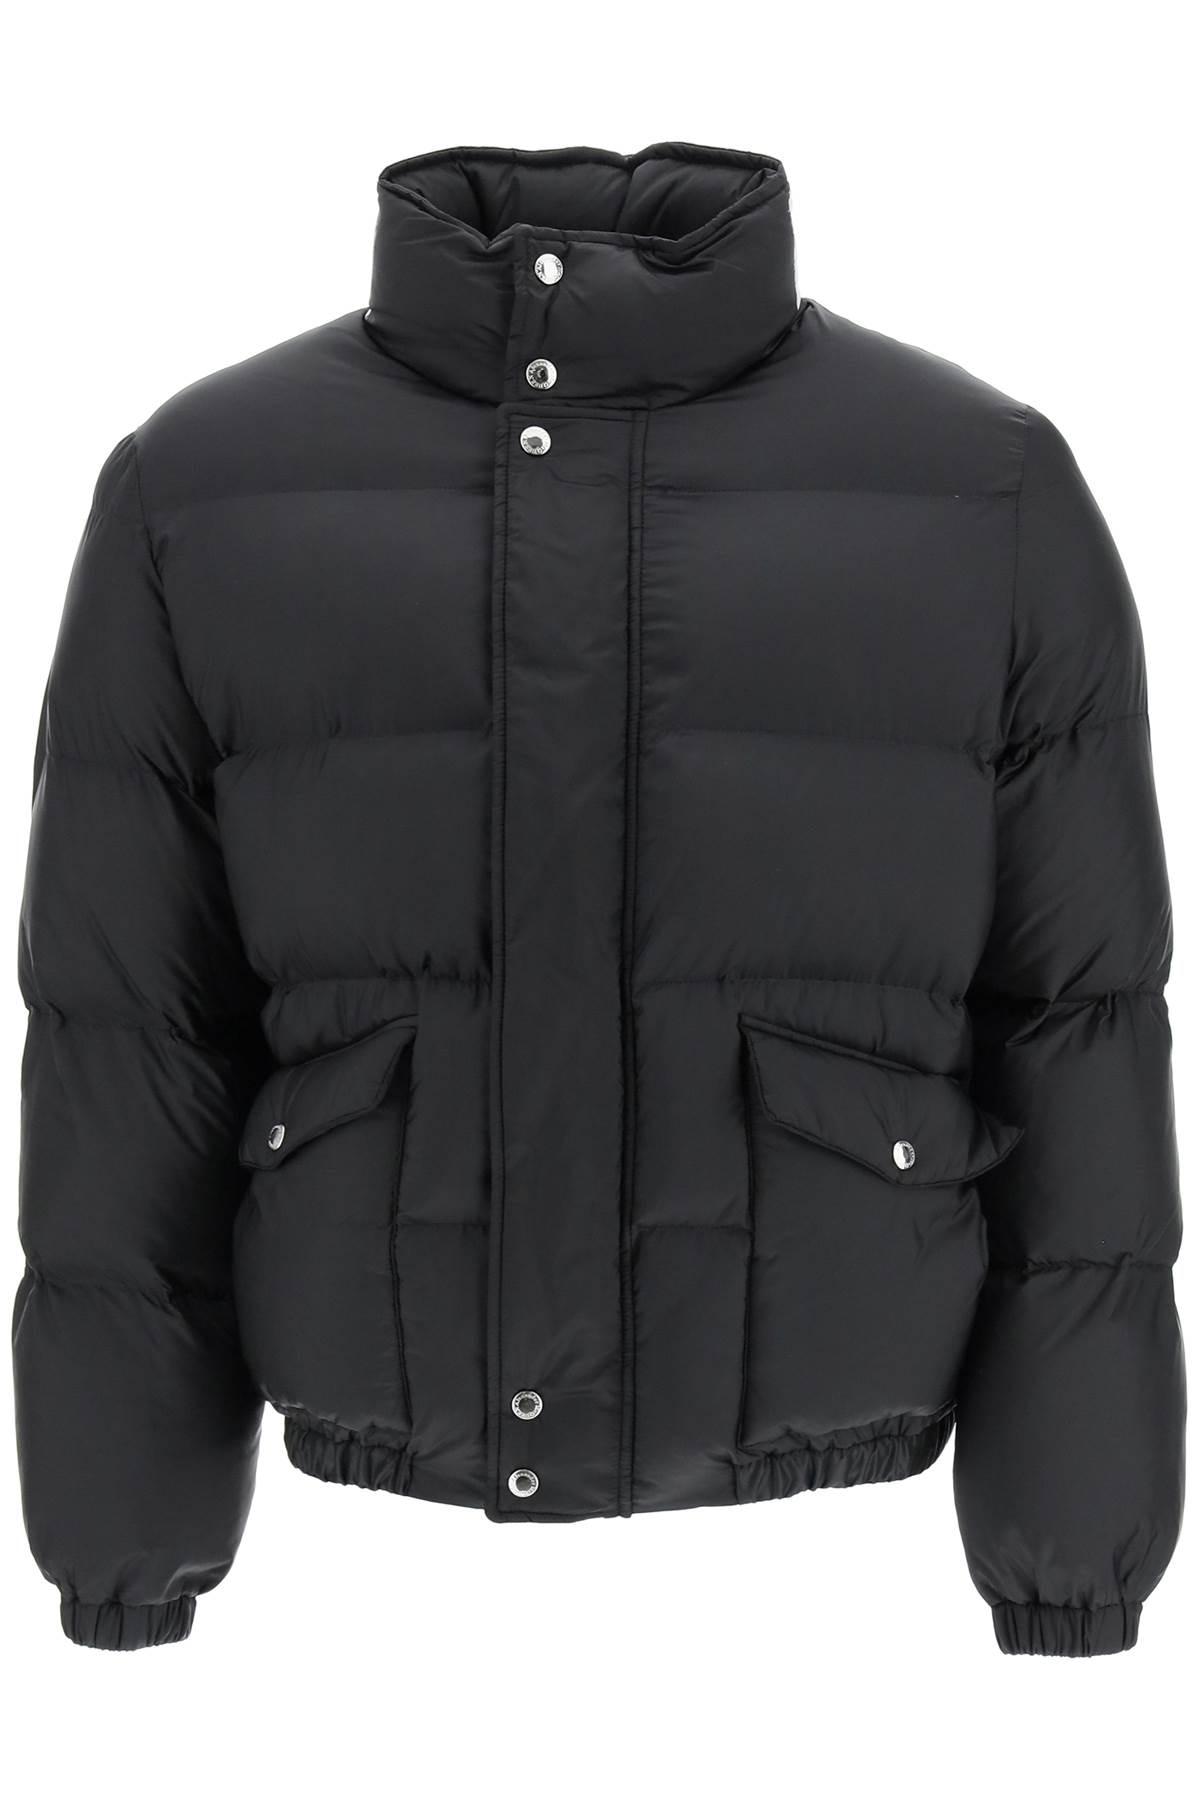 Mens Clothing Jackets Casual jackets Alexander McQueen Graffiti-print Puffer Jacket in Black for Men 